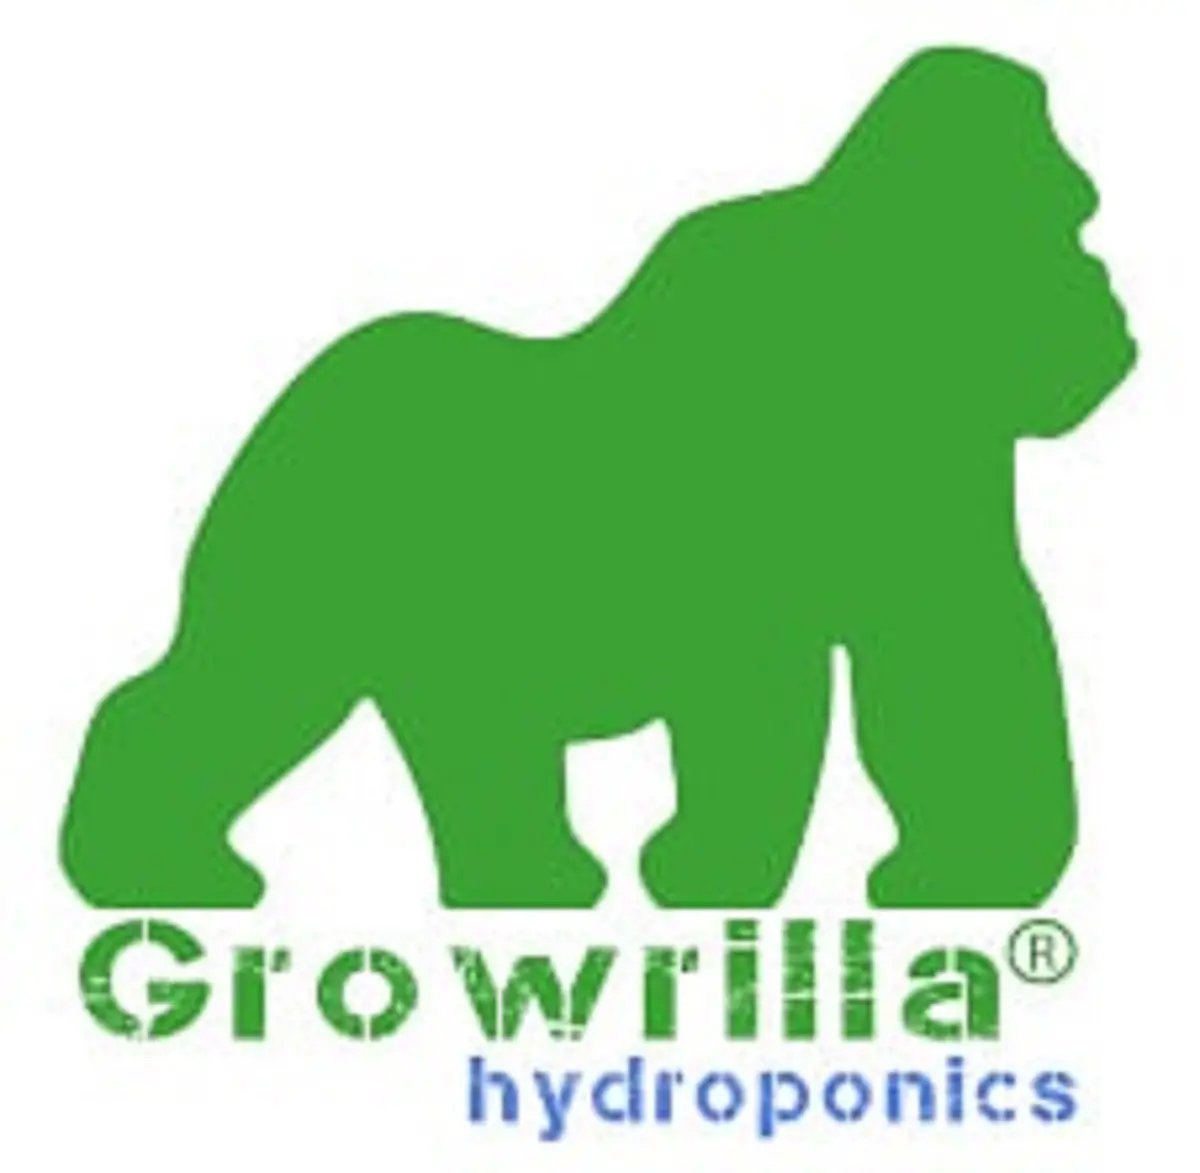 Notre kit de culture en hydroponie Growrilla RDWC 16